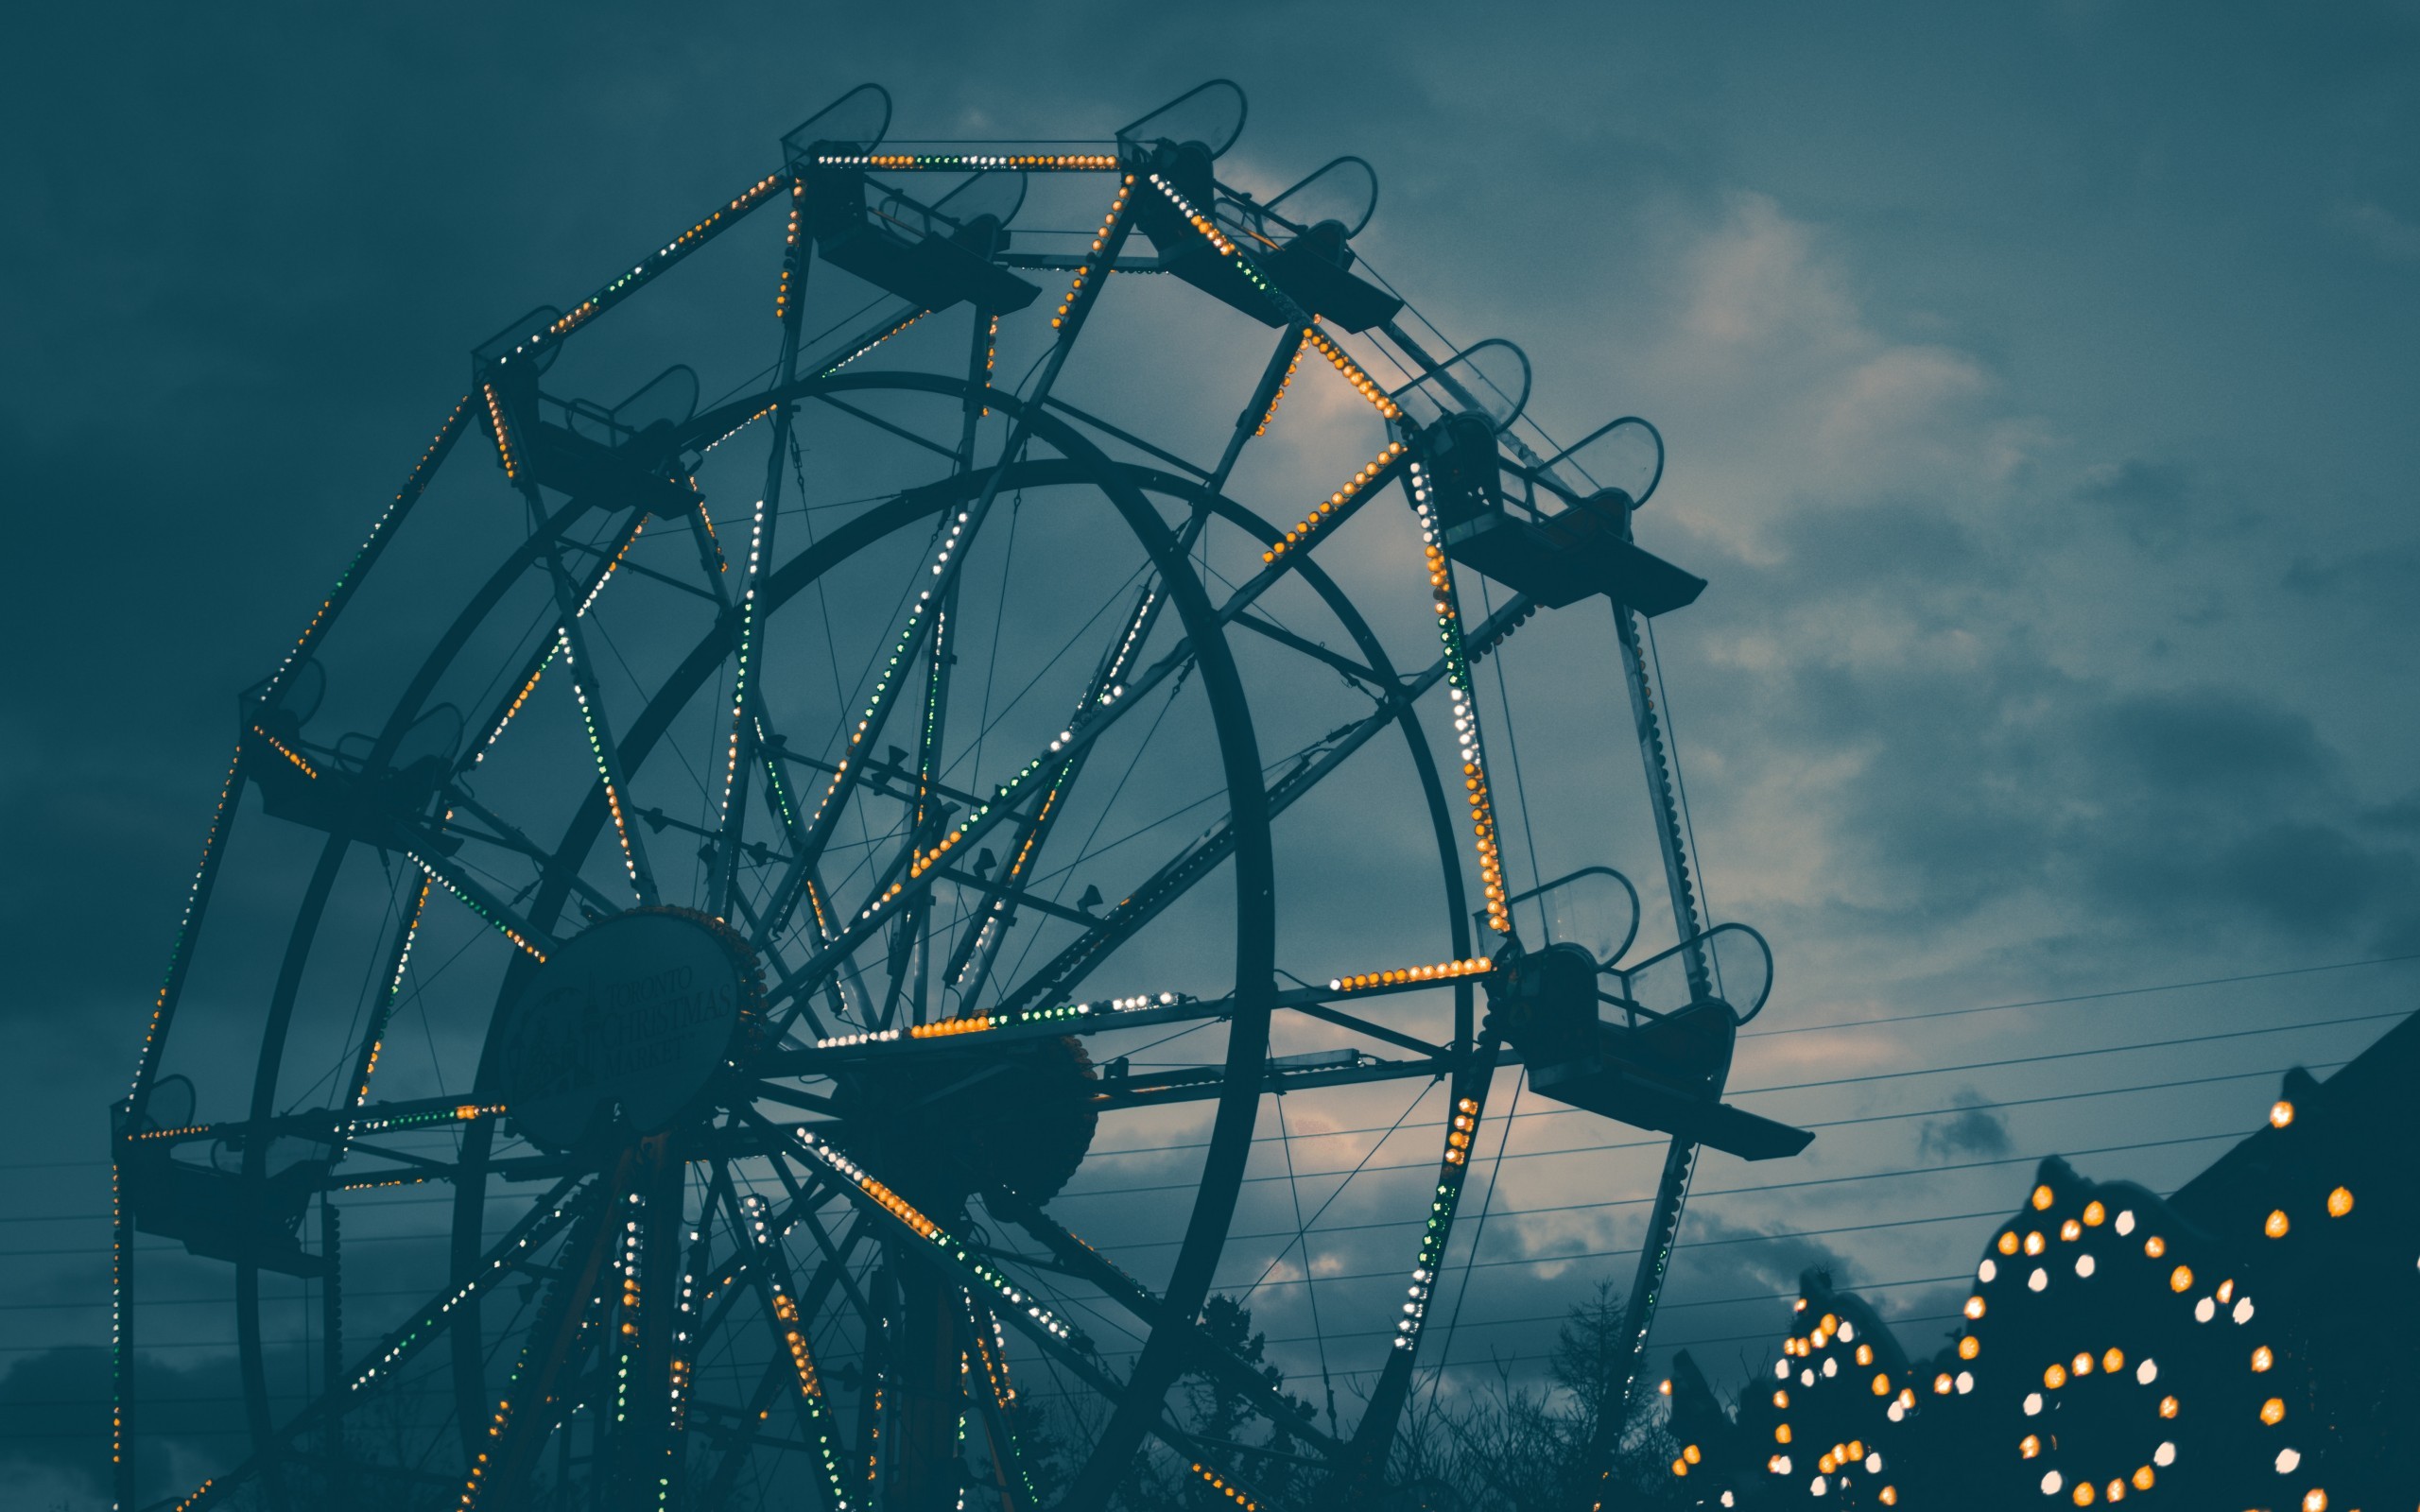 Ferris Wheel, Amusement Park, Night, Scenic, Lights Is Like A Giant Wheel